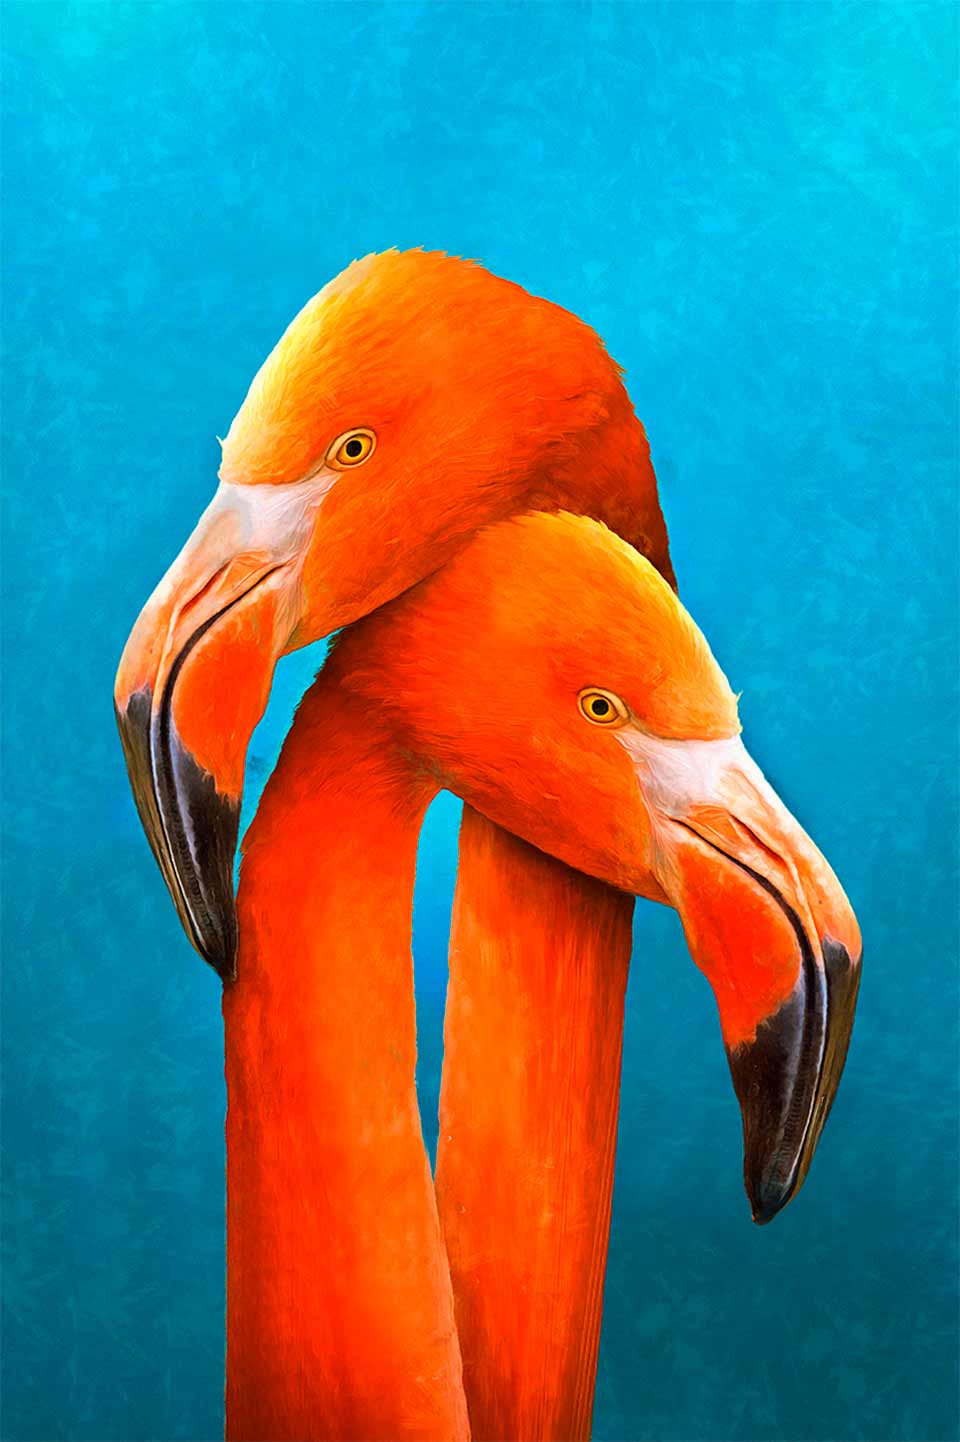 Quadro Retangular - Flamingos